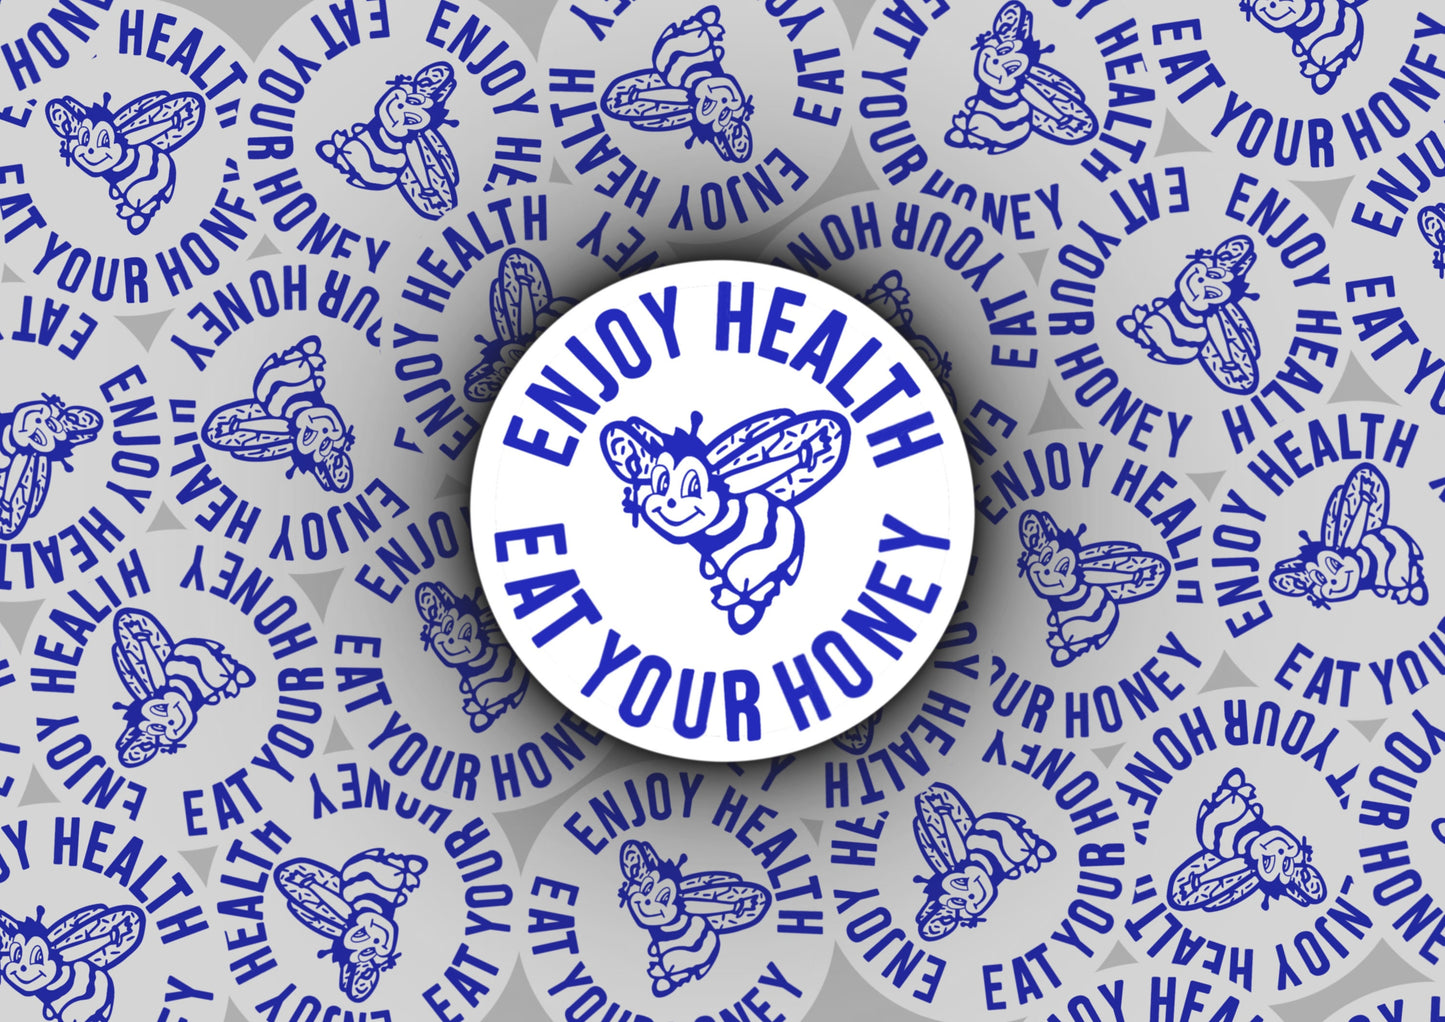 Enjoy Health, Eat Your Honey Sticker | Harry Styles Sticker